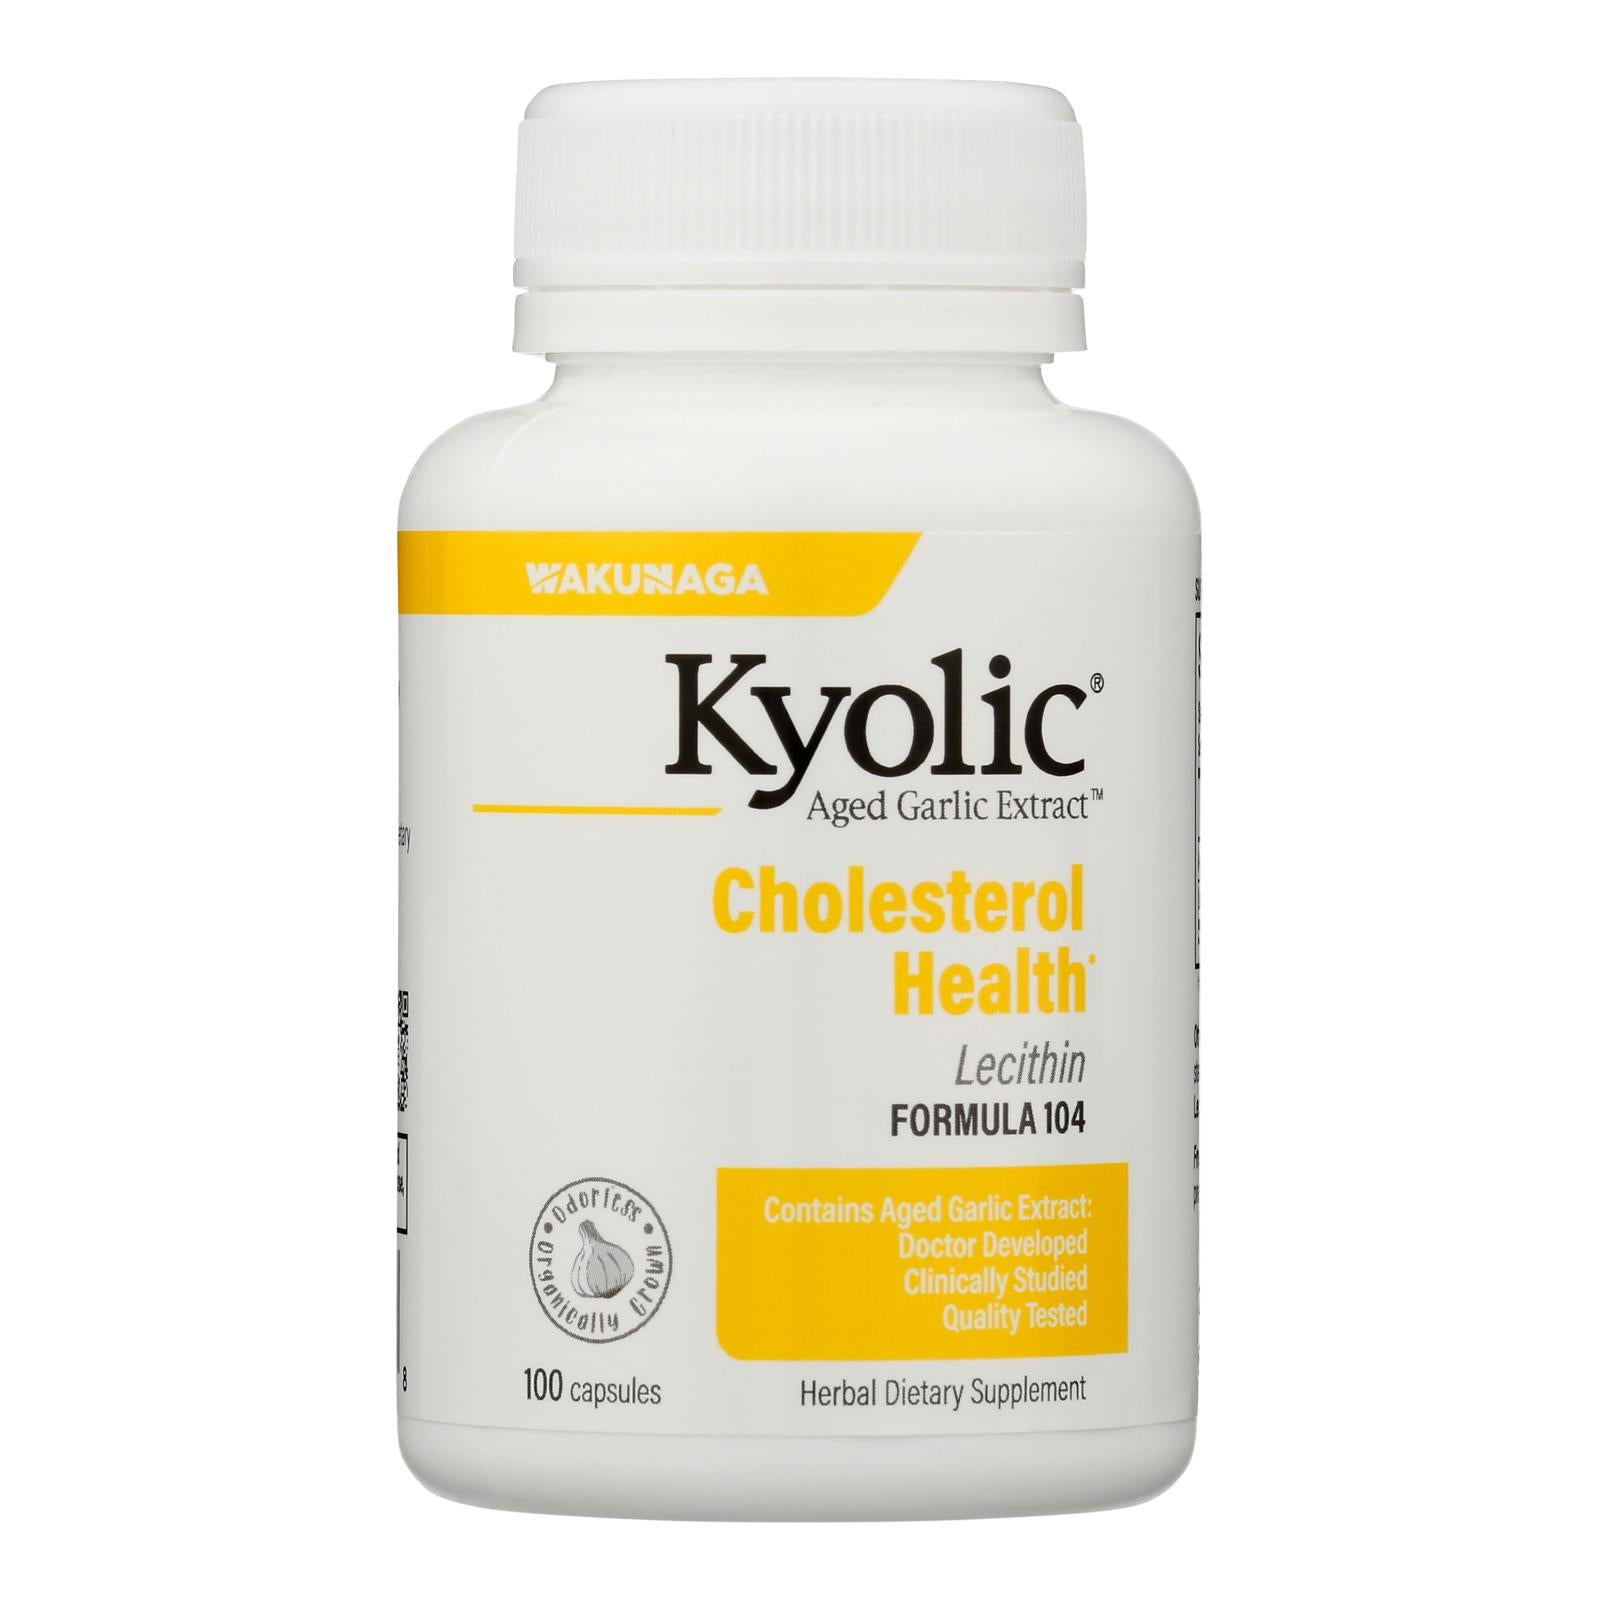 Kyolic - Aged Garlic Extract Cholesterol Formula 104 - 100 Capsules